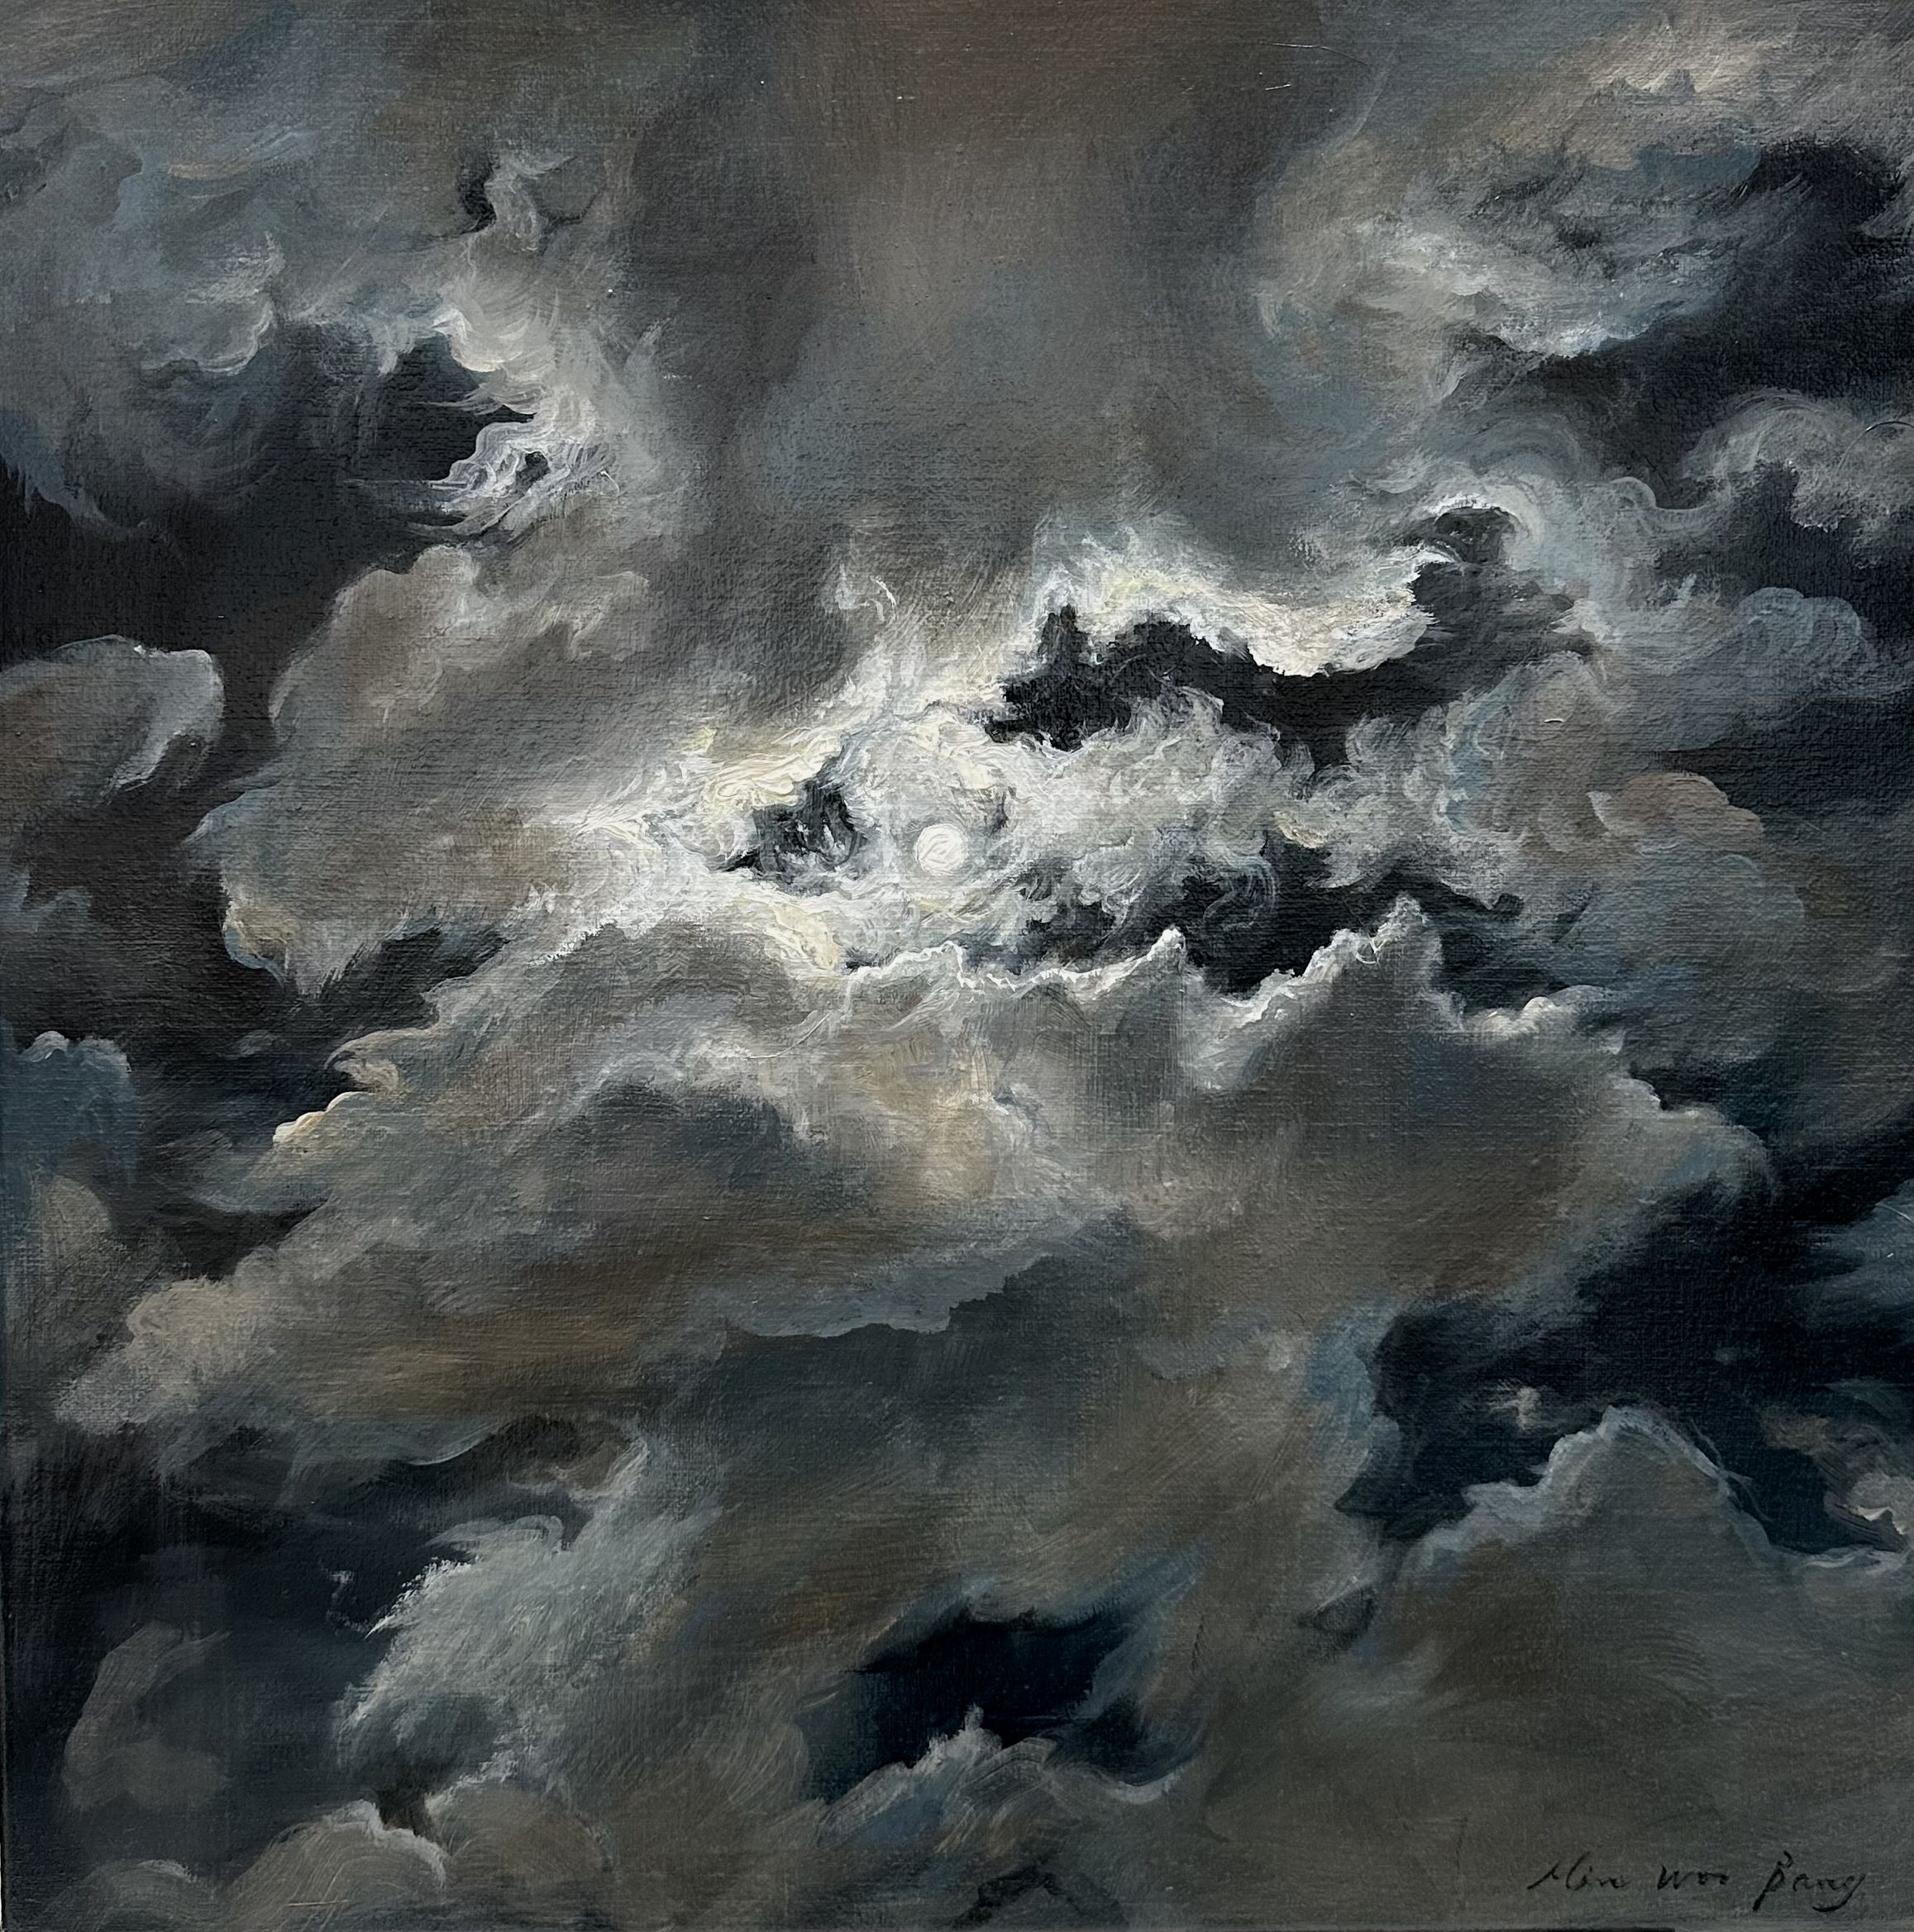 Min-Woo Bang 'Night Clouds' oil on linen 40 x 40cm $4,000